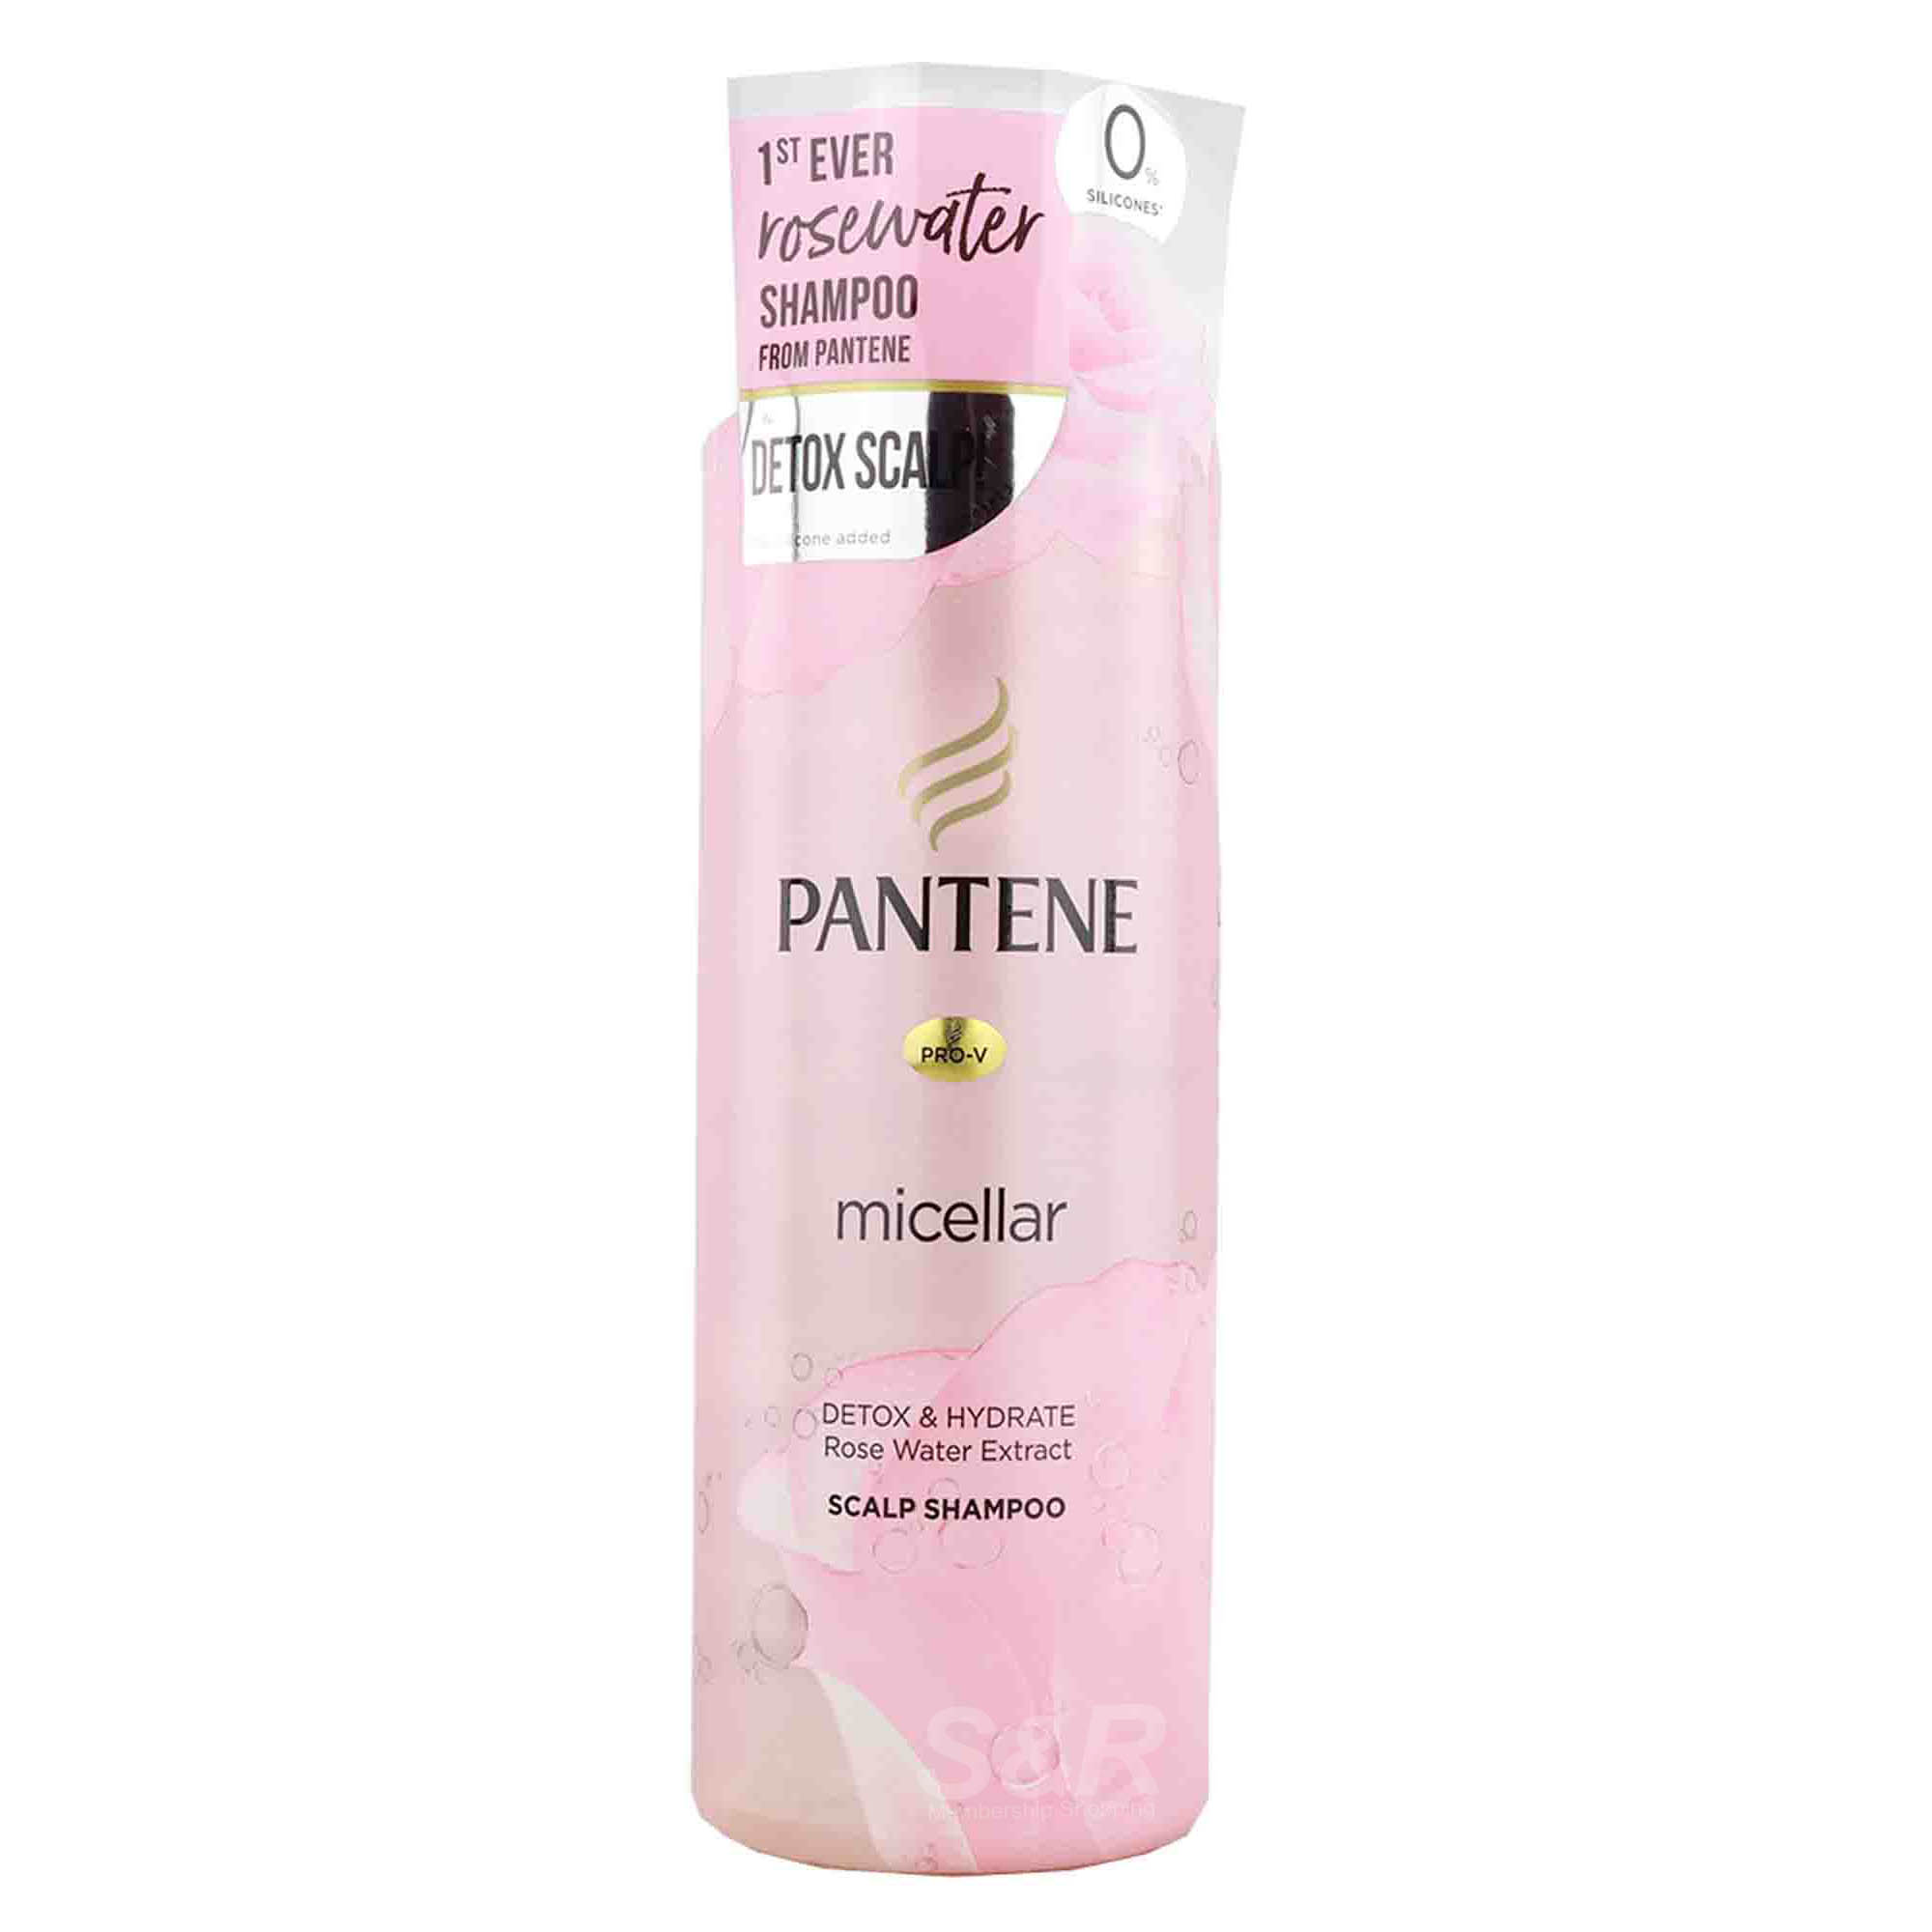 Pantene Pro-V Micellar Detox & Hydrate Scalp Shampoo 530mL